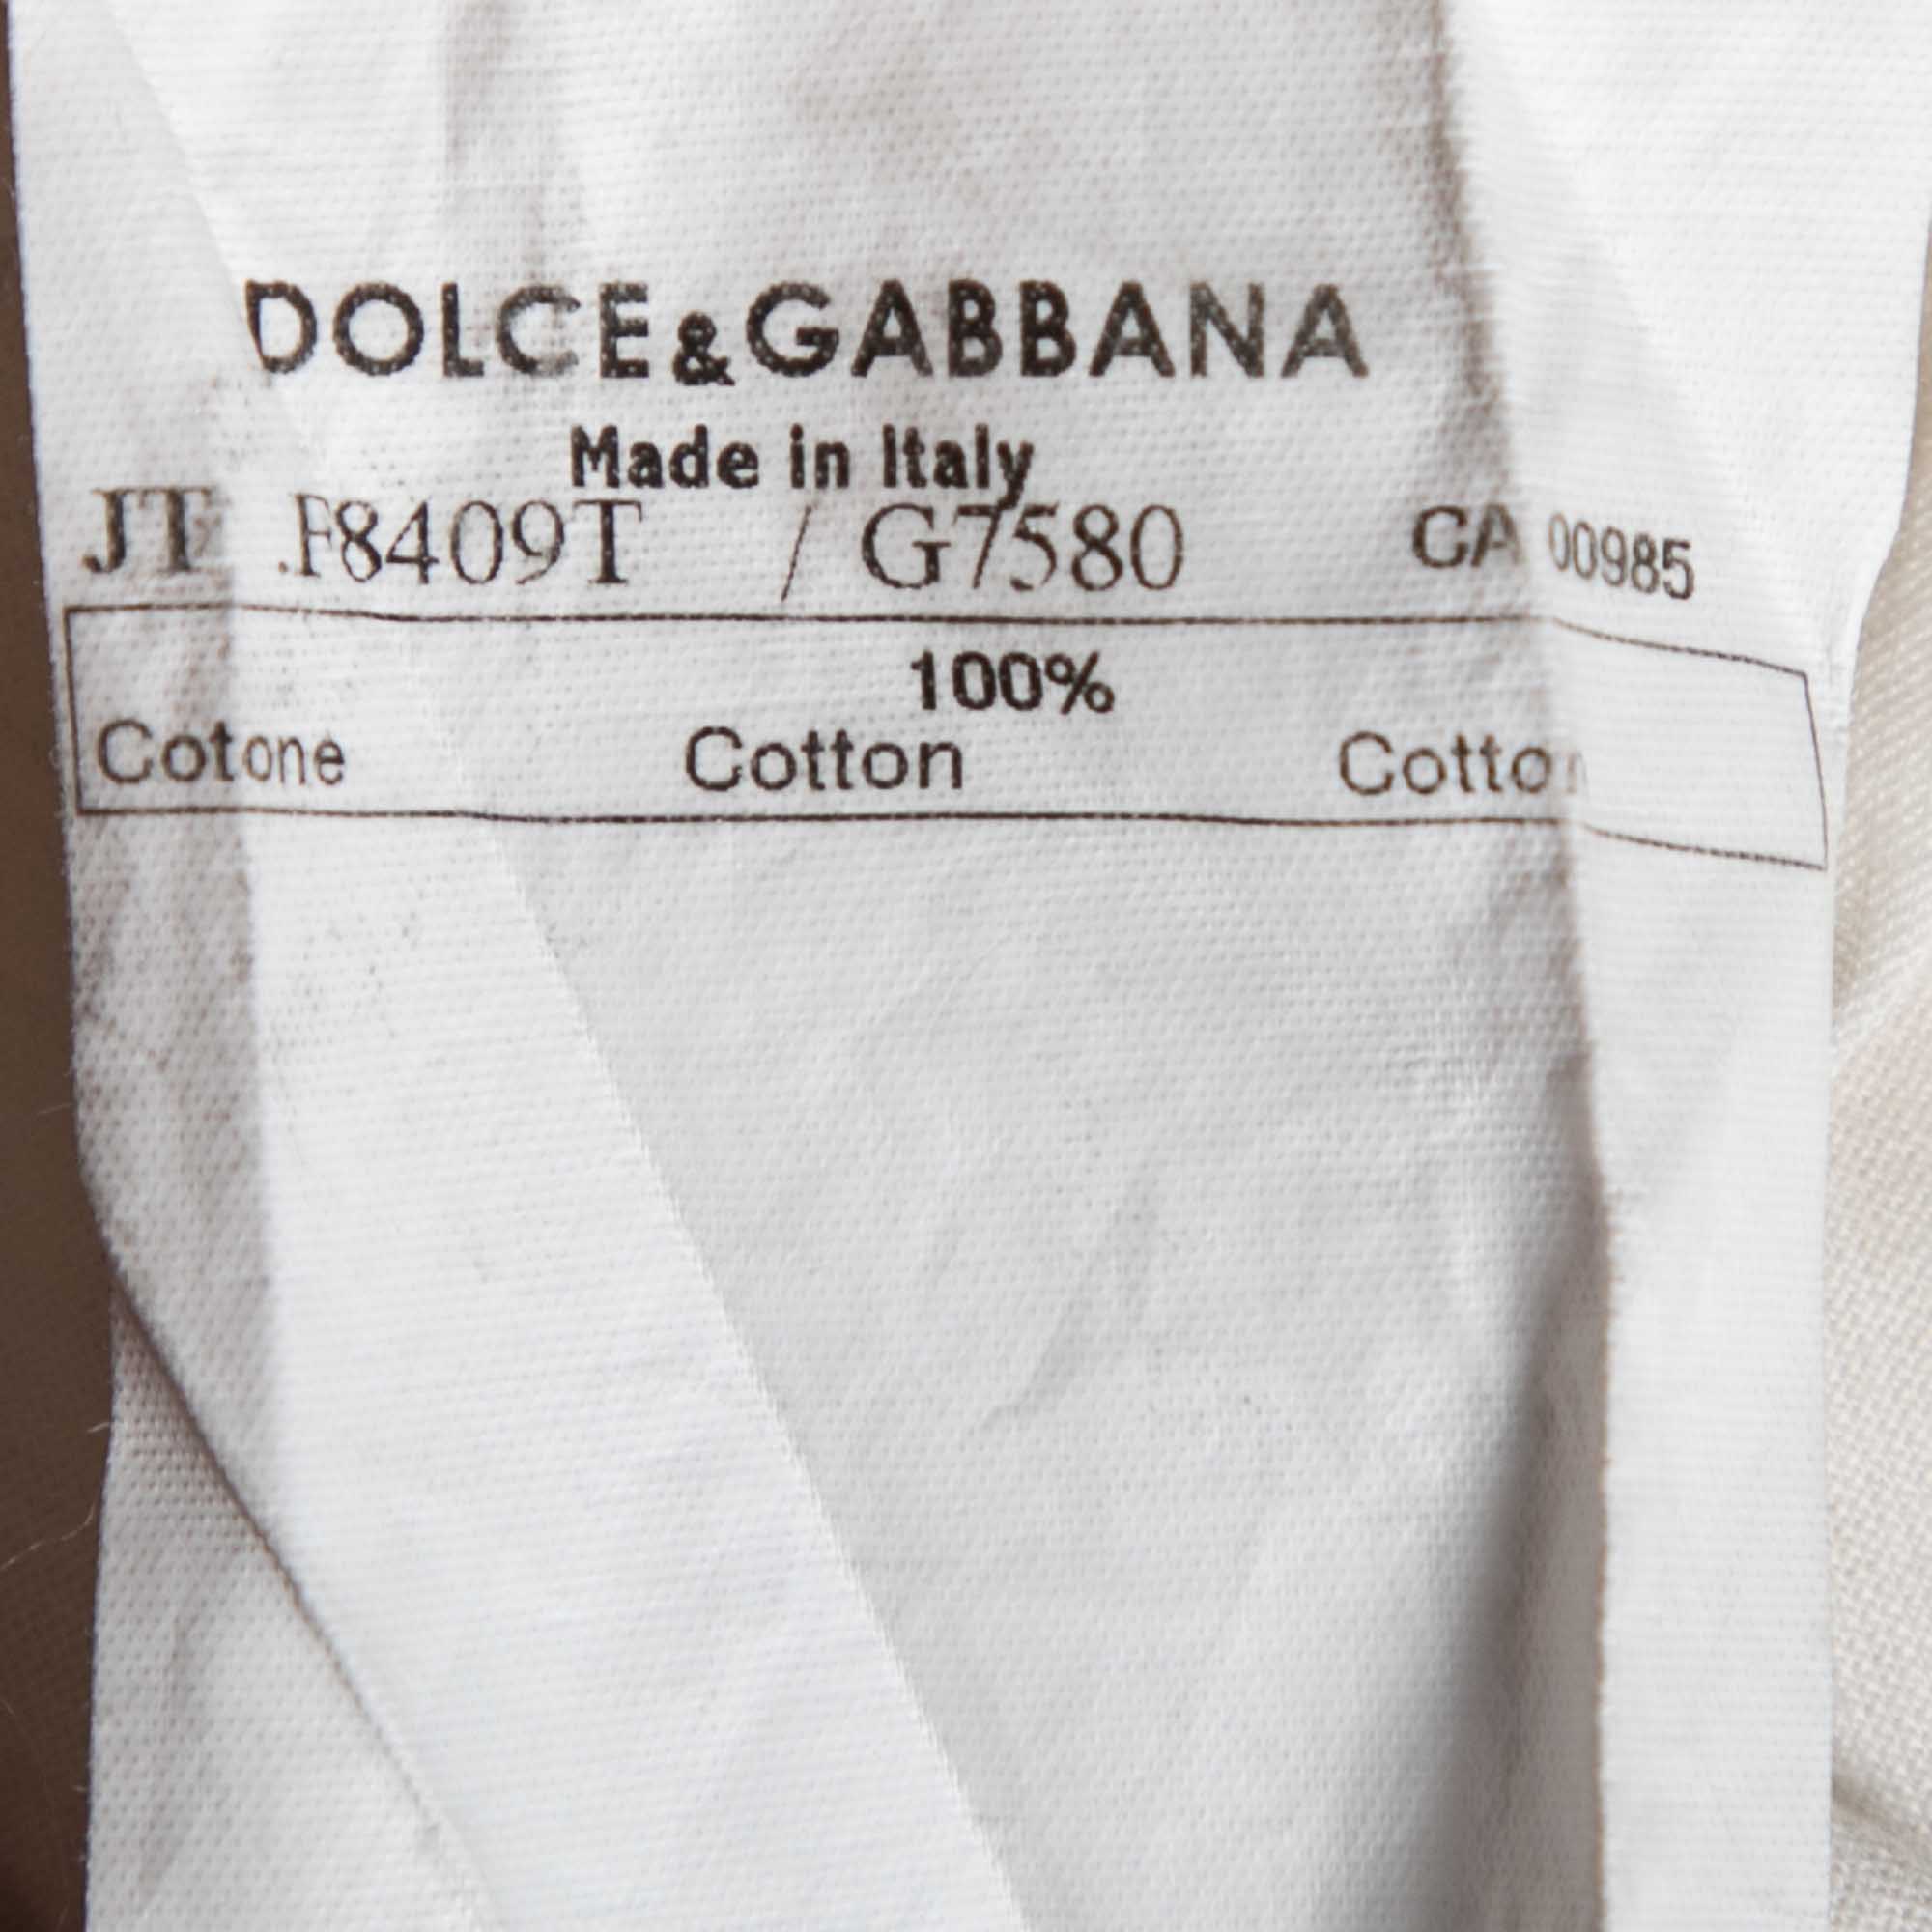 Dolce & Gabbana Cream Marilyn Monroe Printed Cotton T-Shirt XS